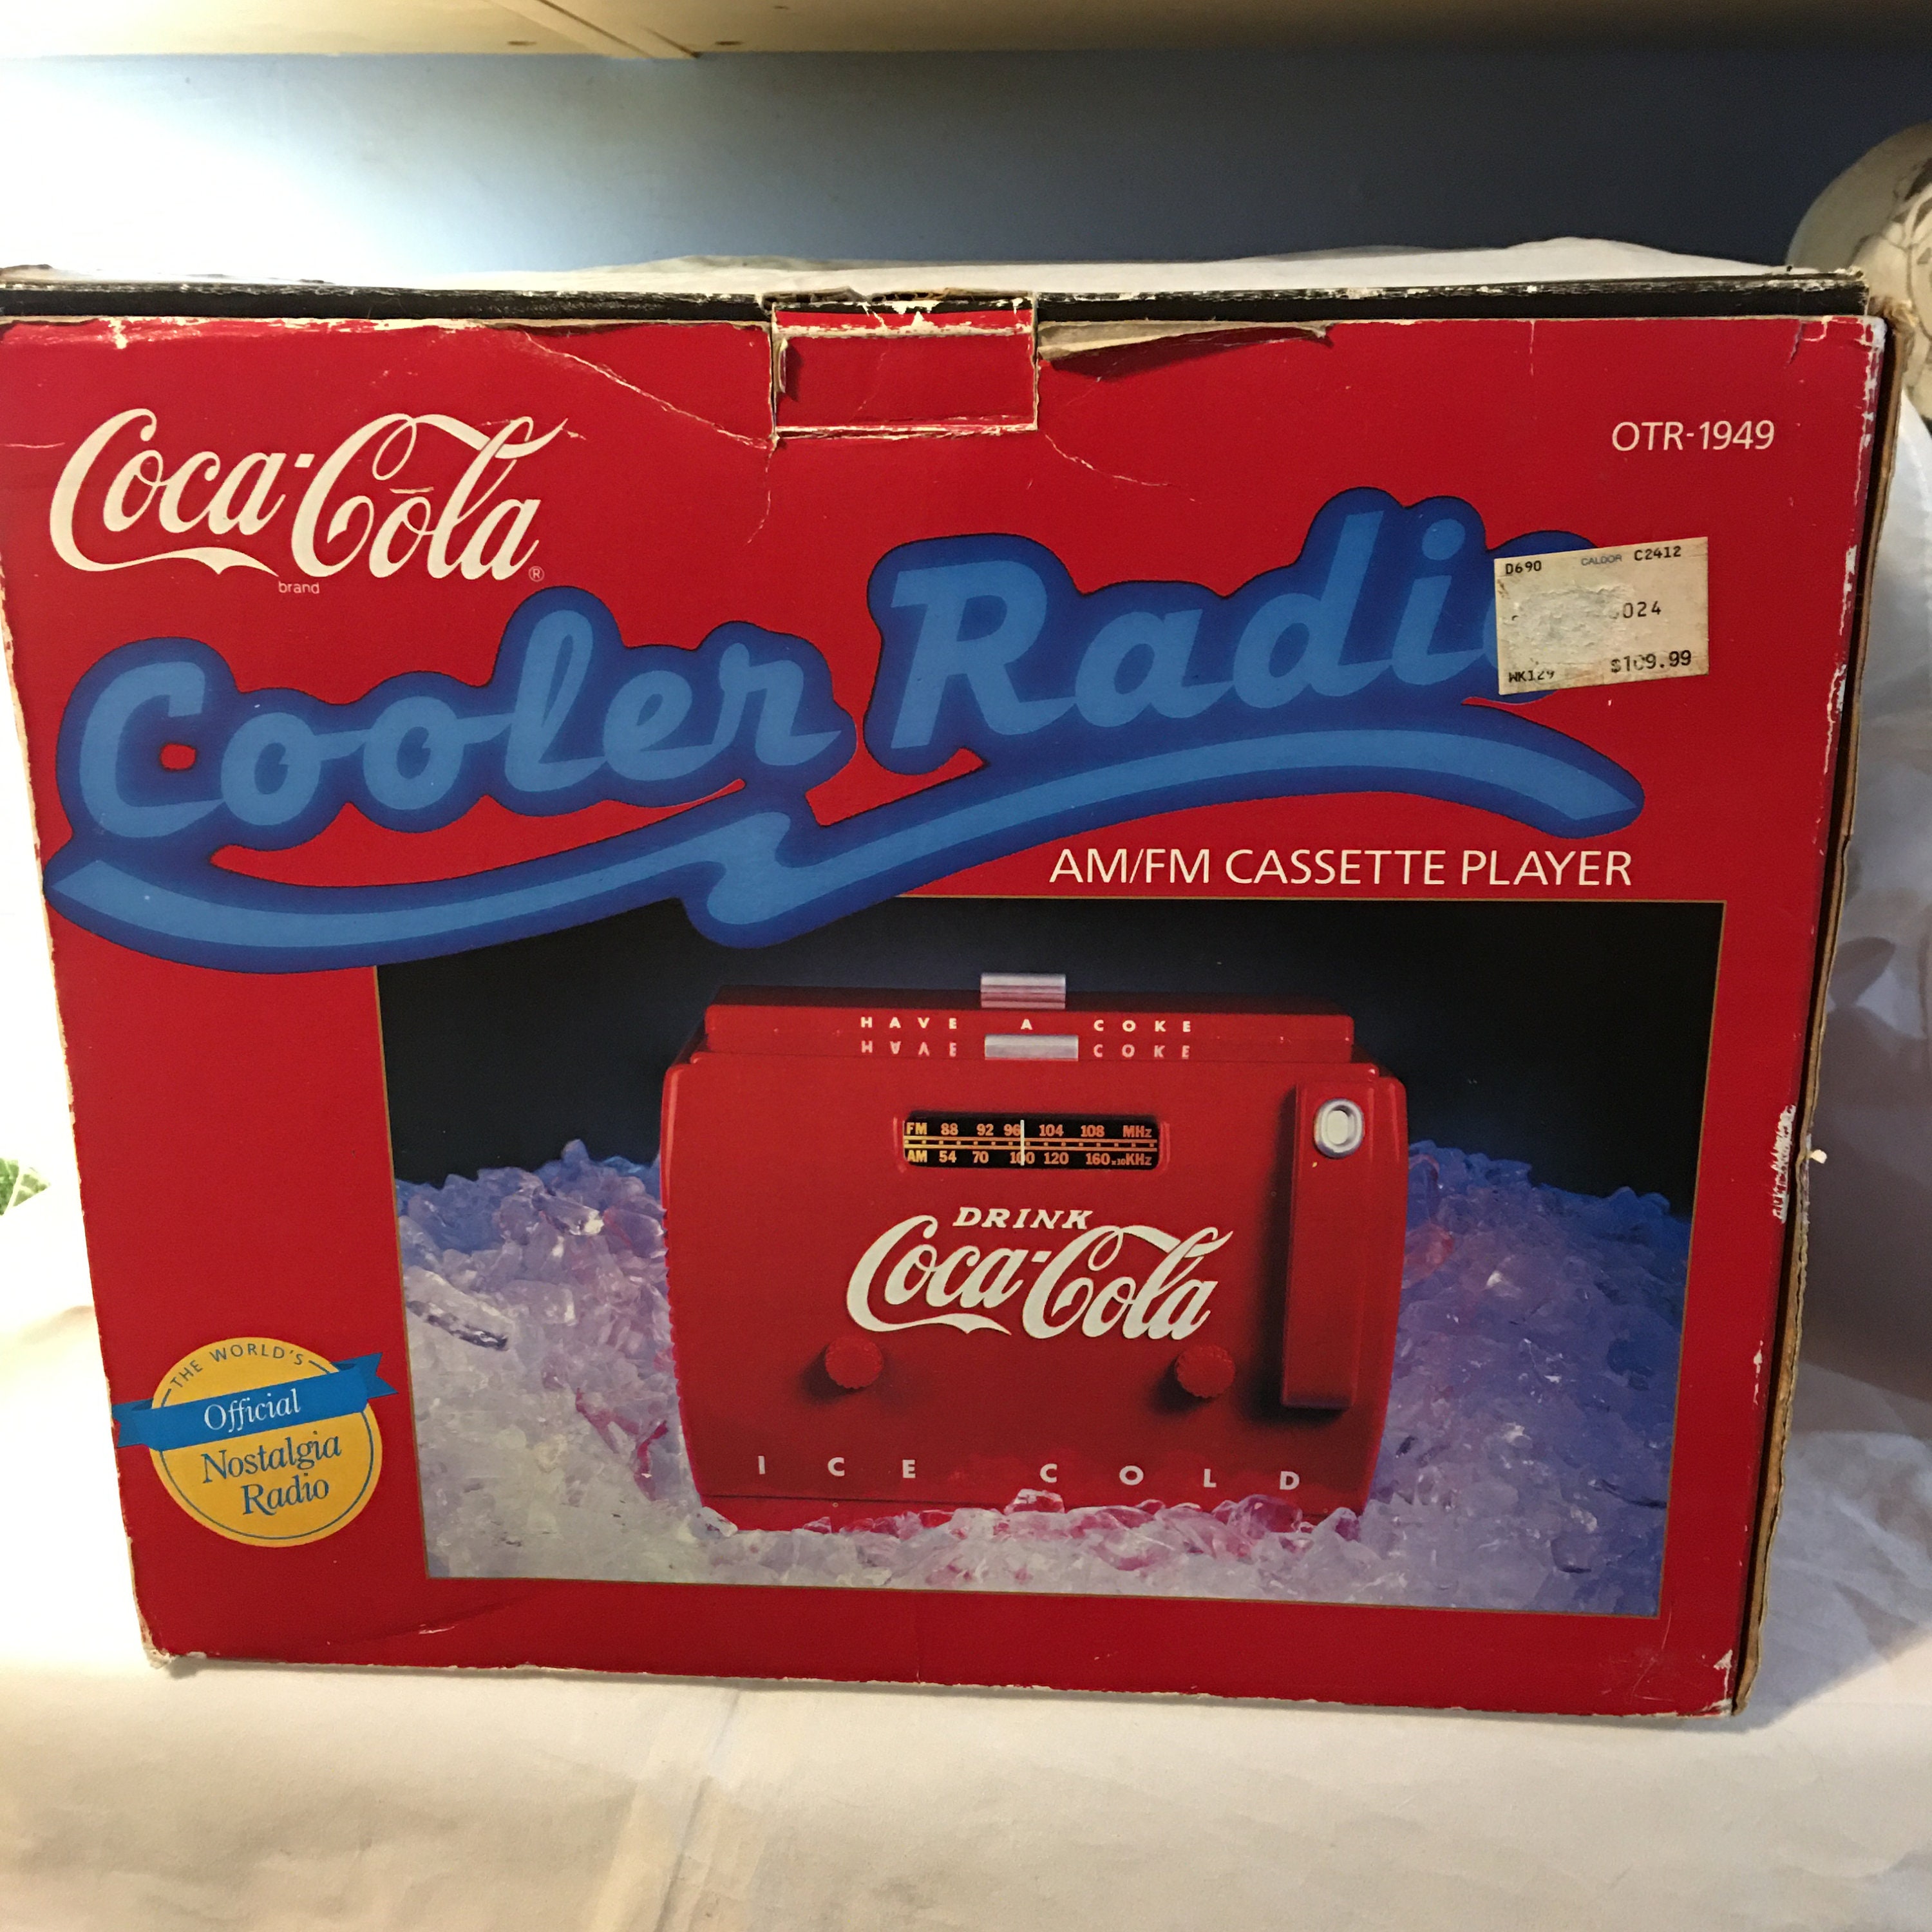 Coca Cola Cooler Am Fm Radio And Cassette Player In Original Box Cheap Good Goods First Class